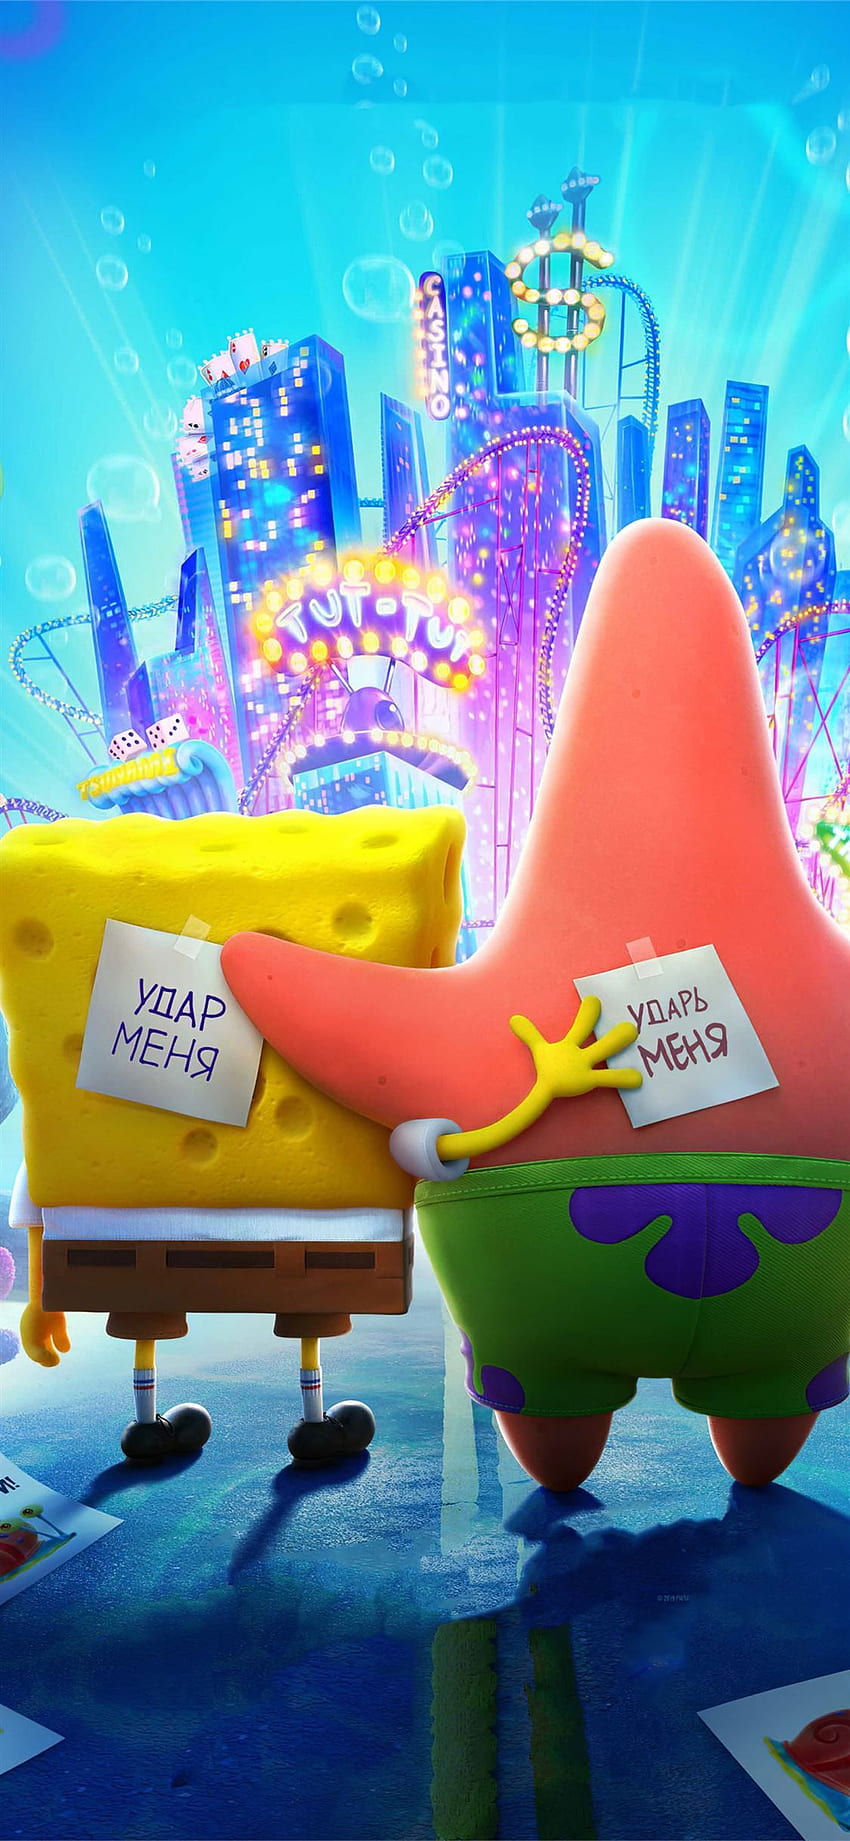 1920x1080px 1080p Free Download Spongebob Iphone Spongebob Krusty Krab Hd Phone Wallpaper 0454